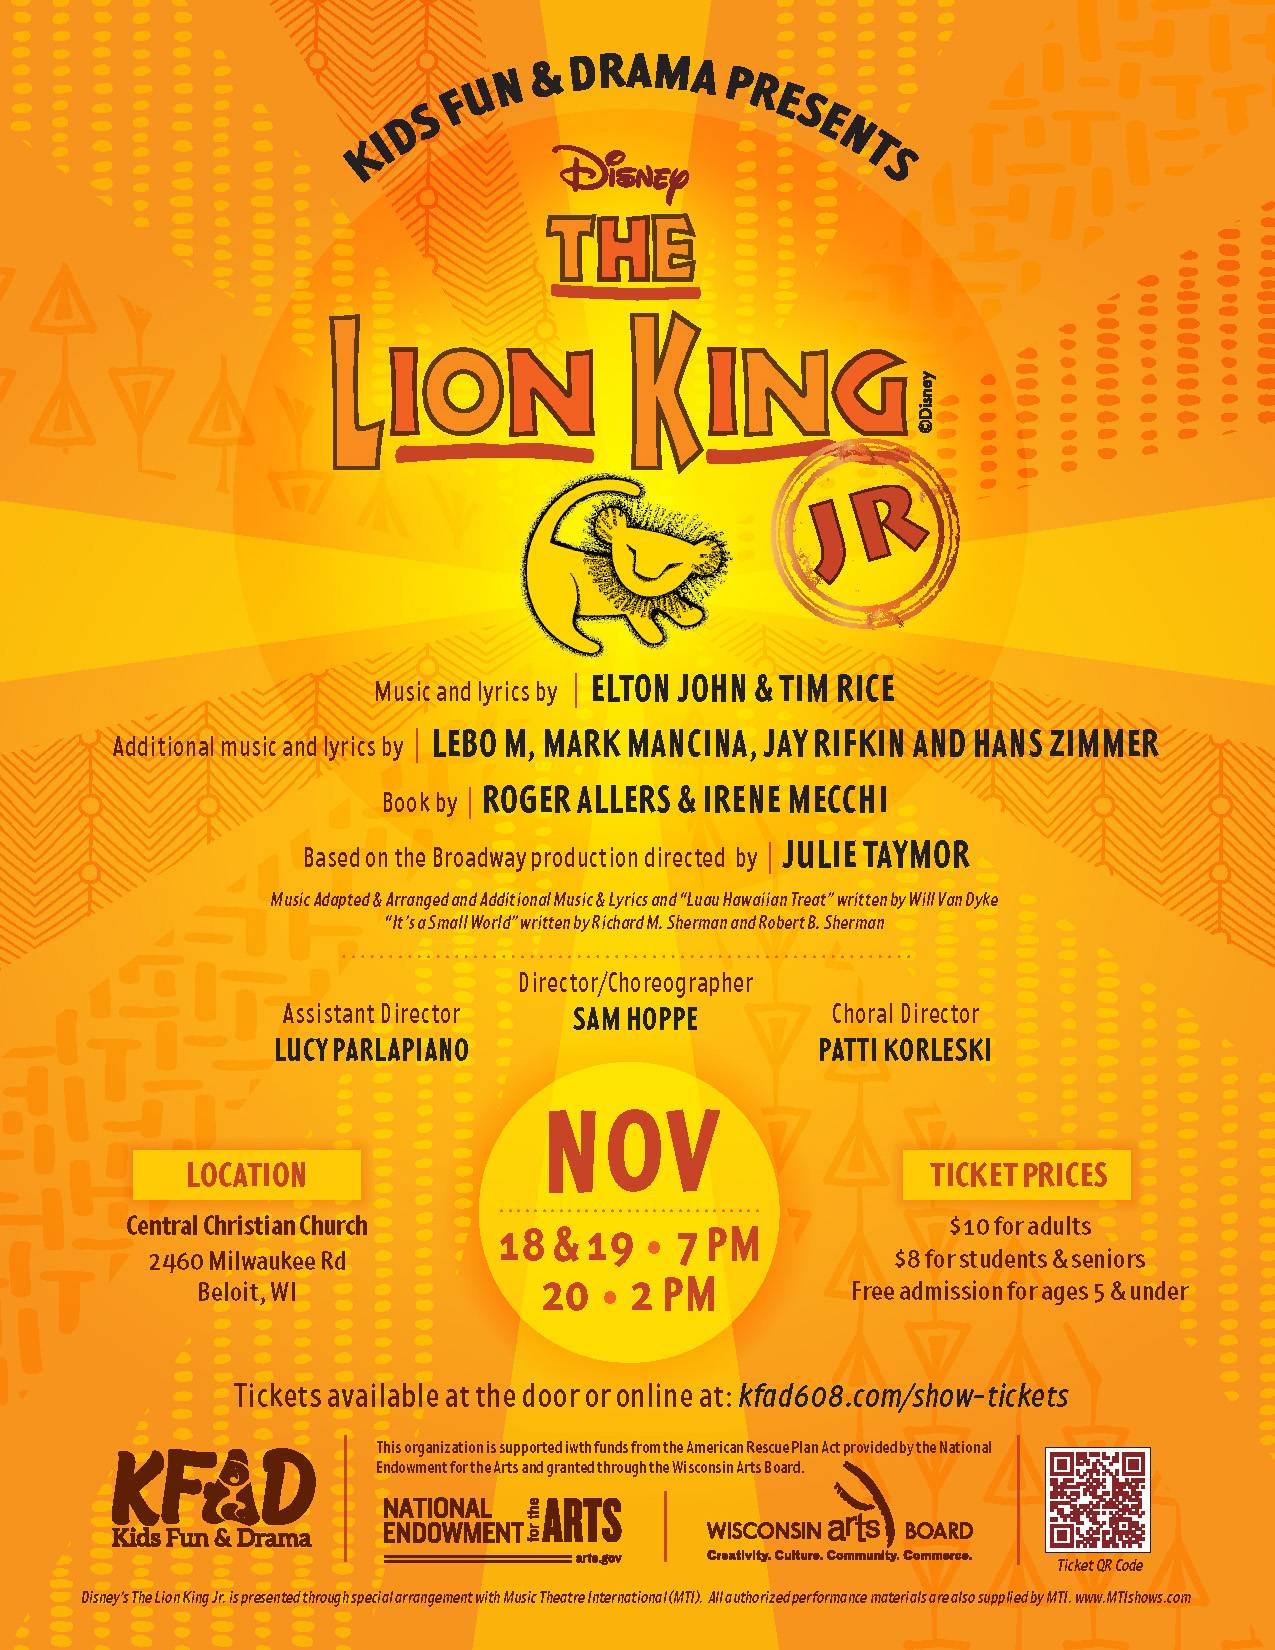 KFAD Presents: The Lion King Jr. Banner